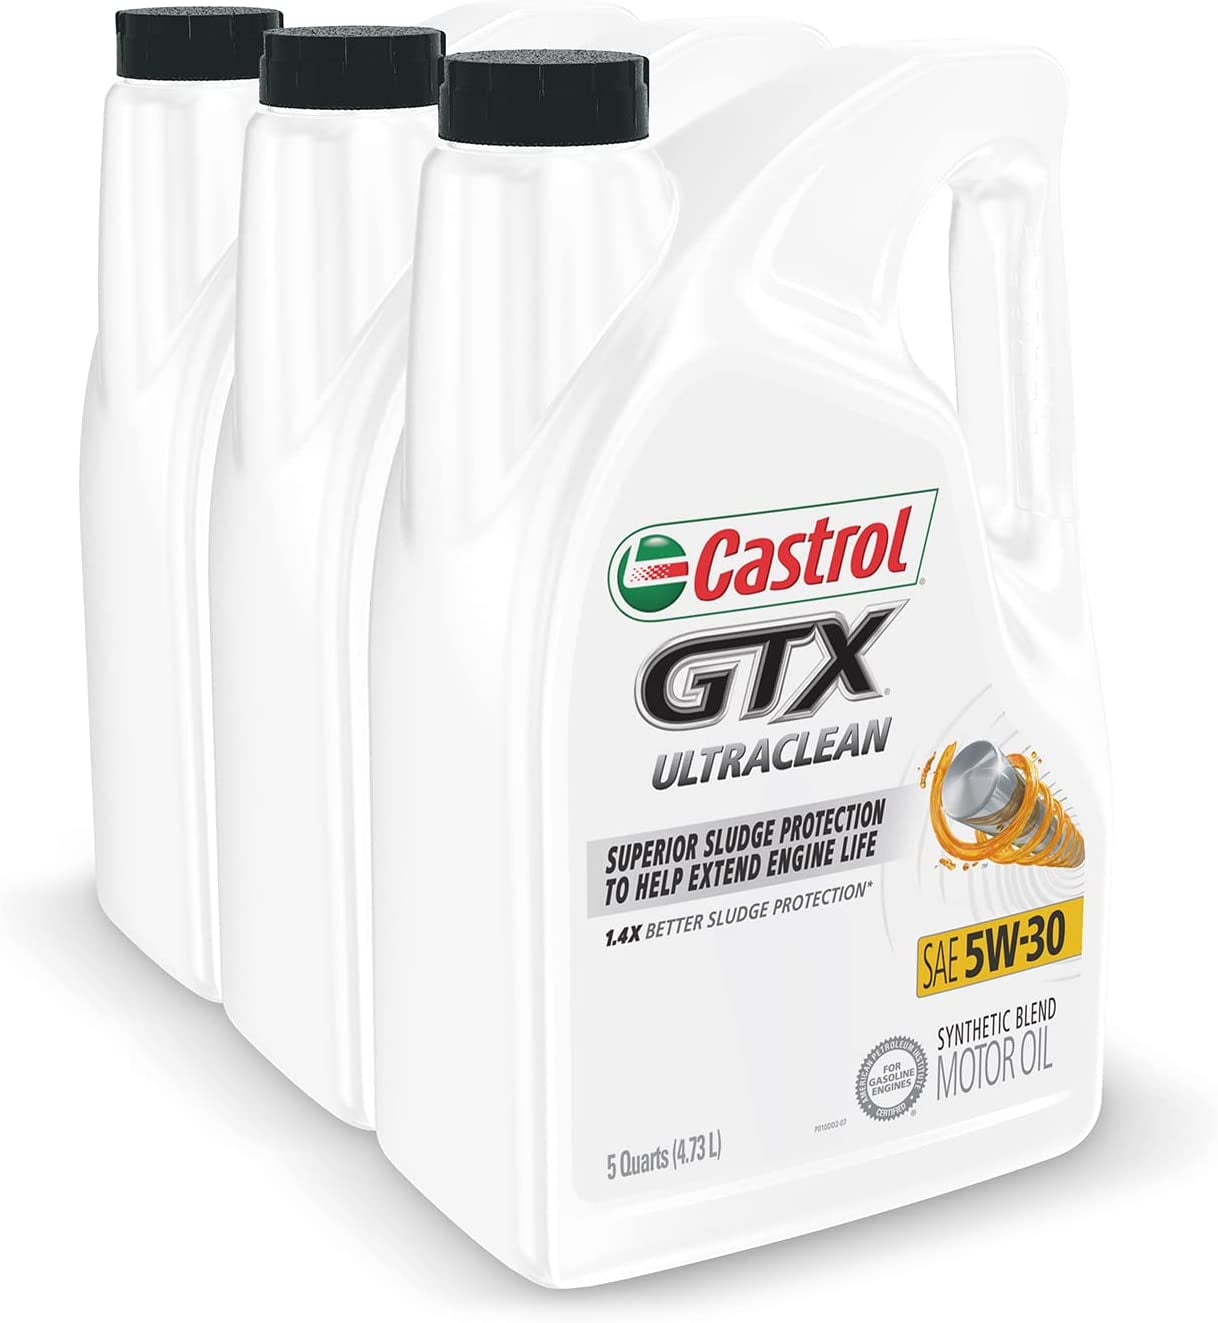 Castrol GTX Ultraclean 5W-30 Synthetic Blend Motor Oil